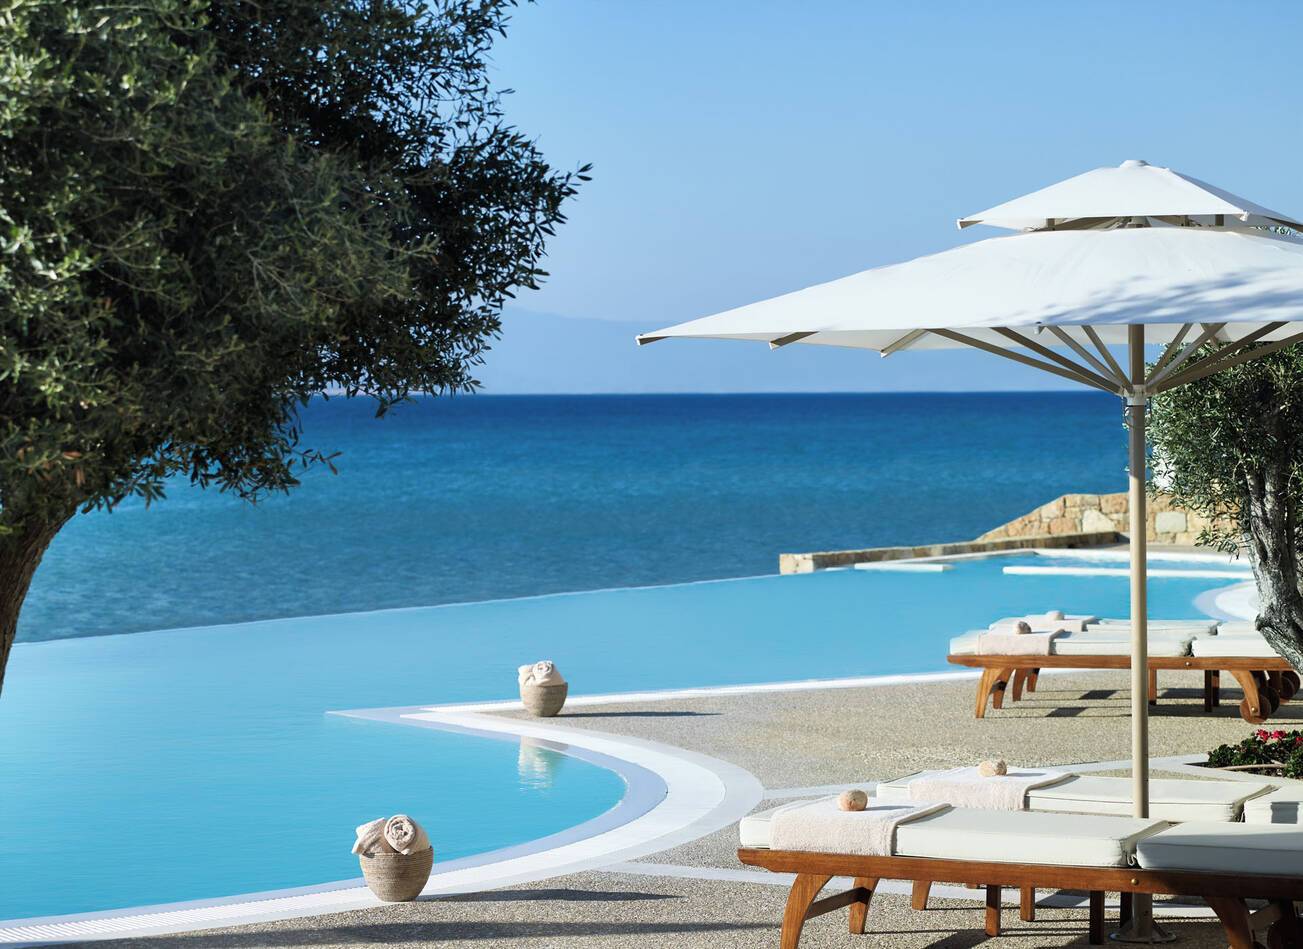 Sani Resort Thessalonique Grece Infinity Pool